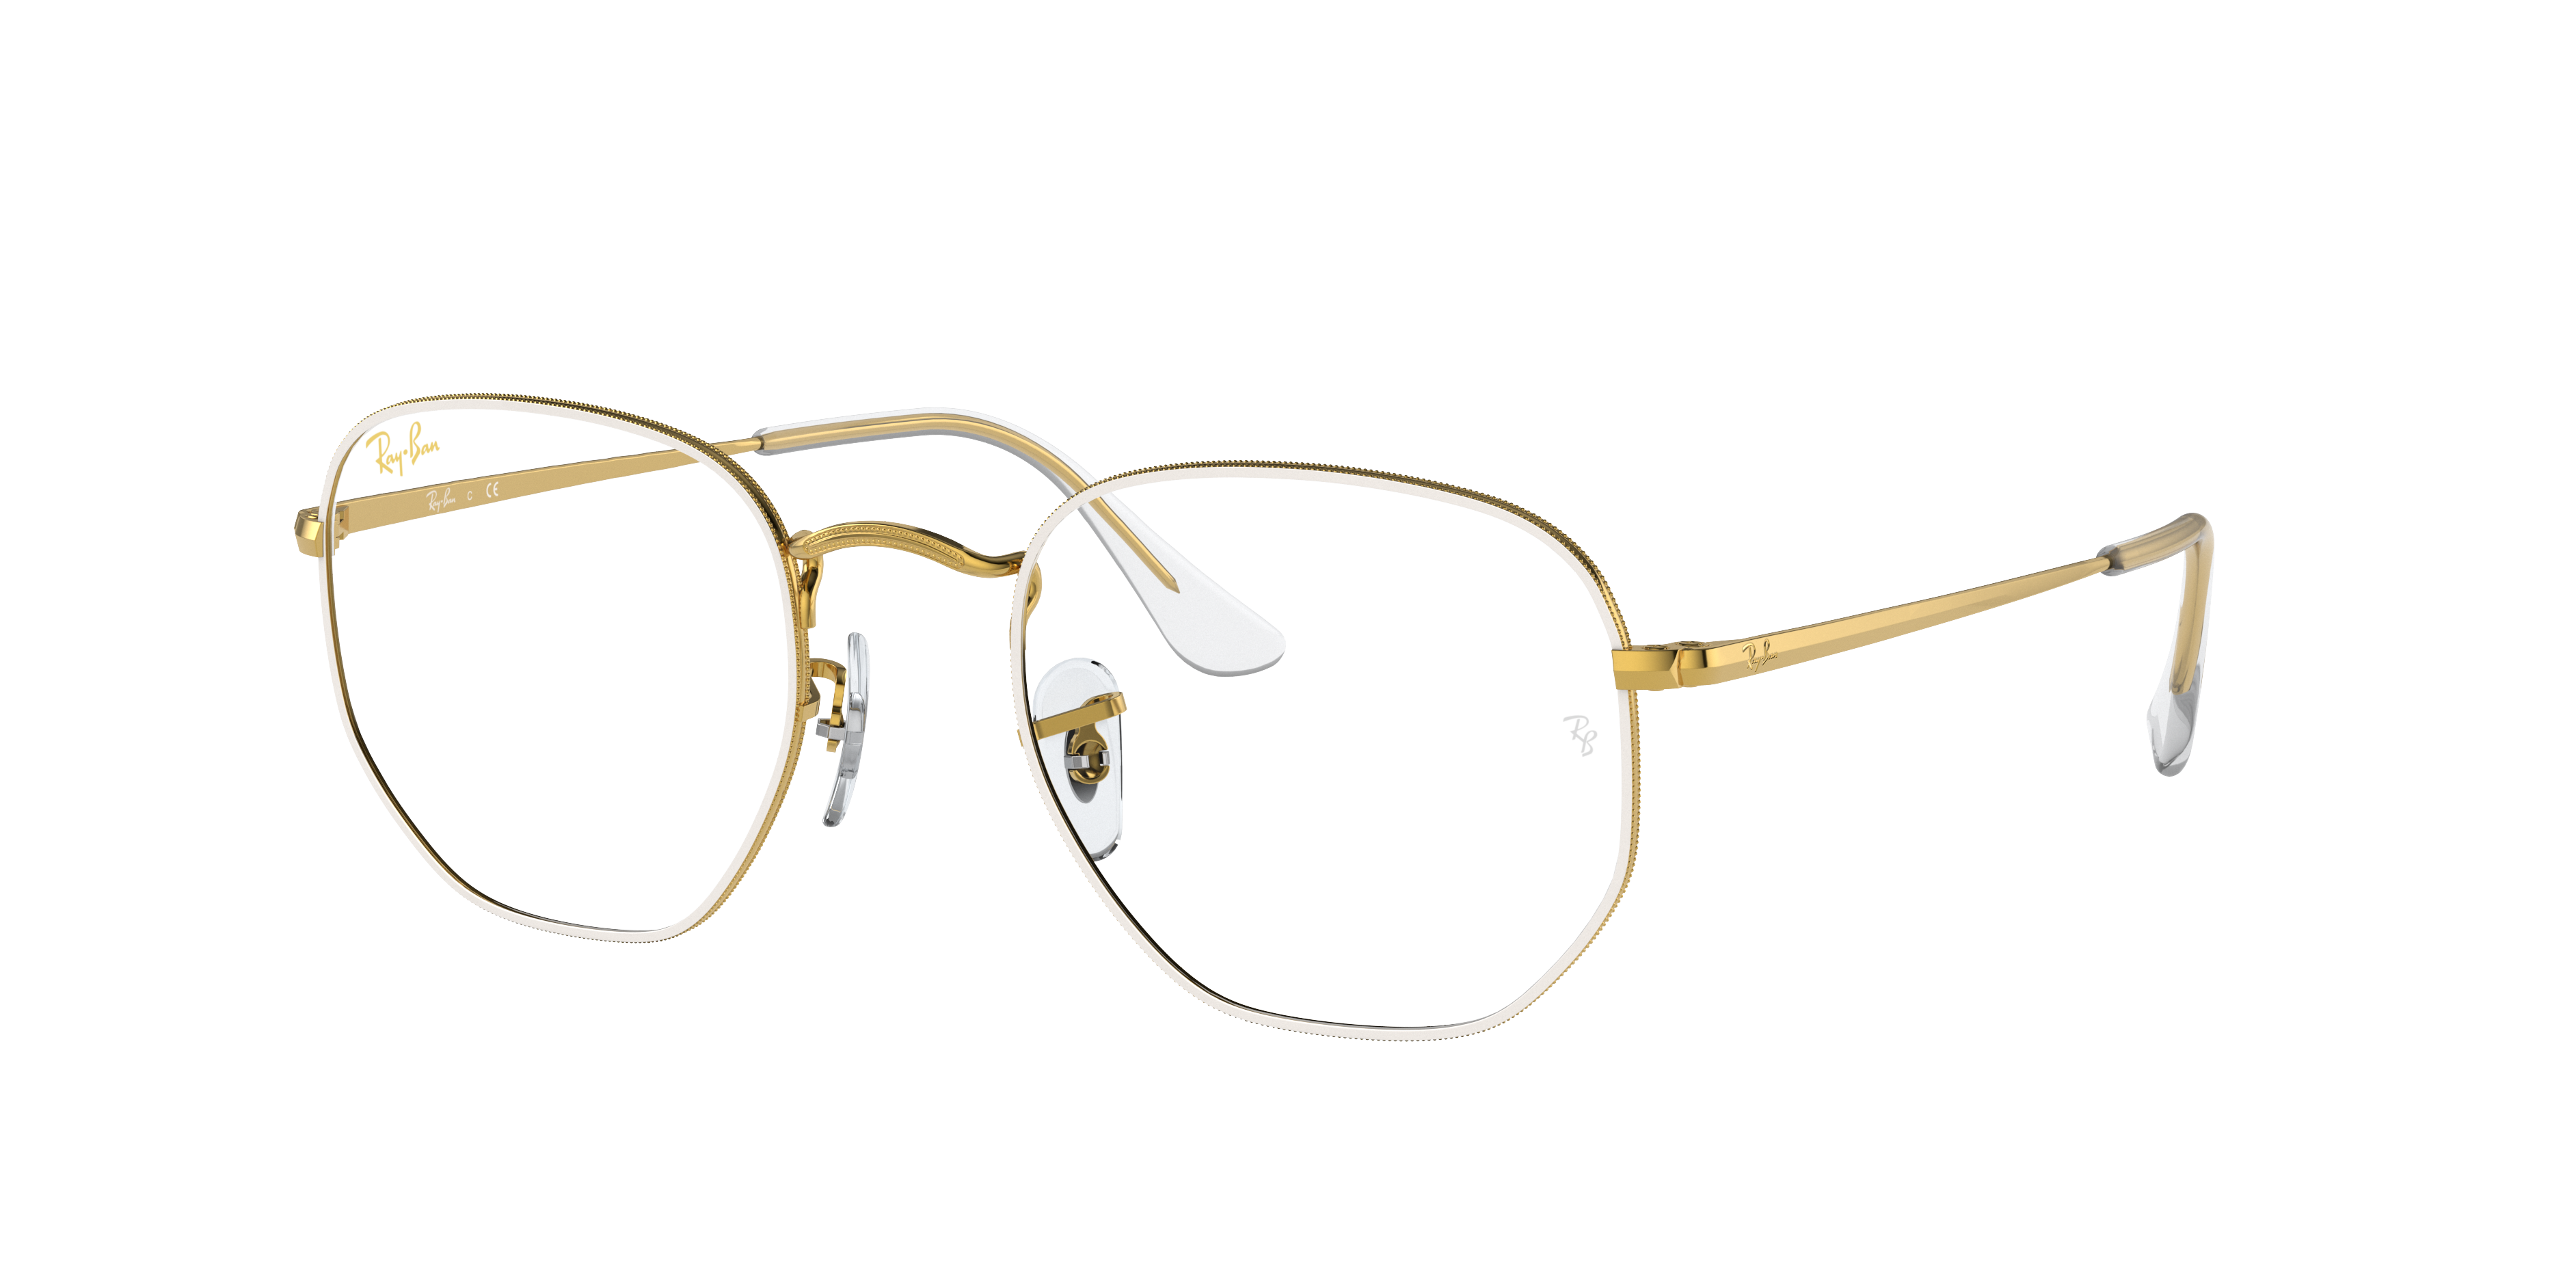 Ray Ban Hexagonal Optics Eyeglasses Gold Frame Clear Lenses 48-21